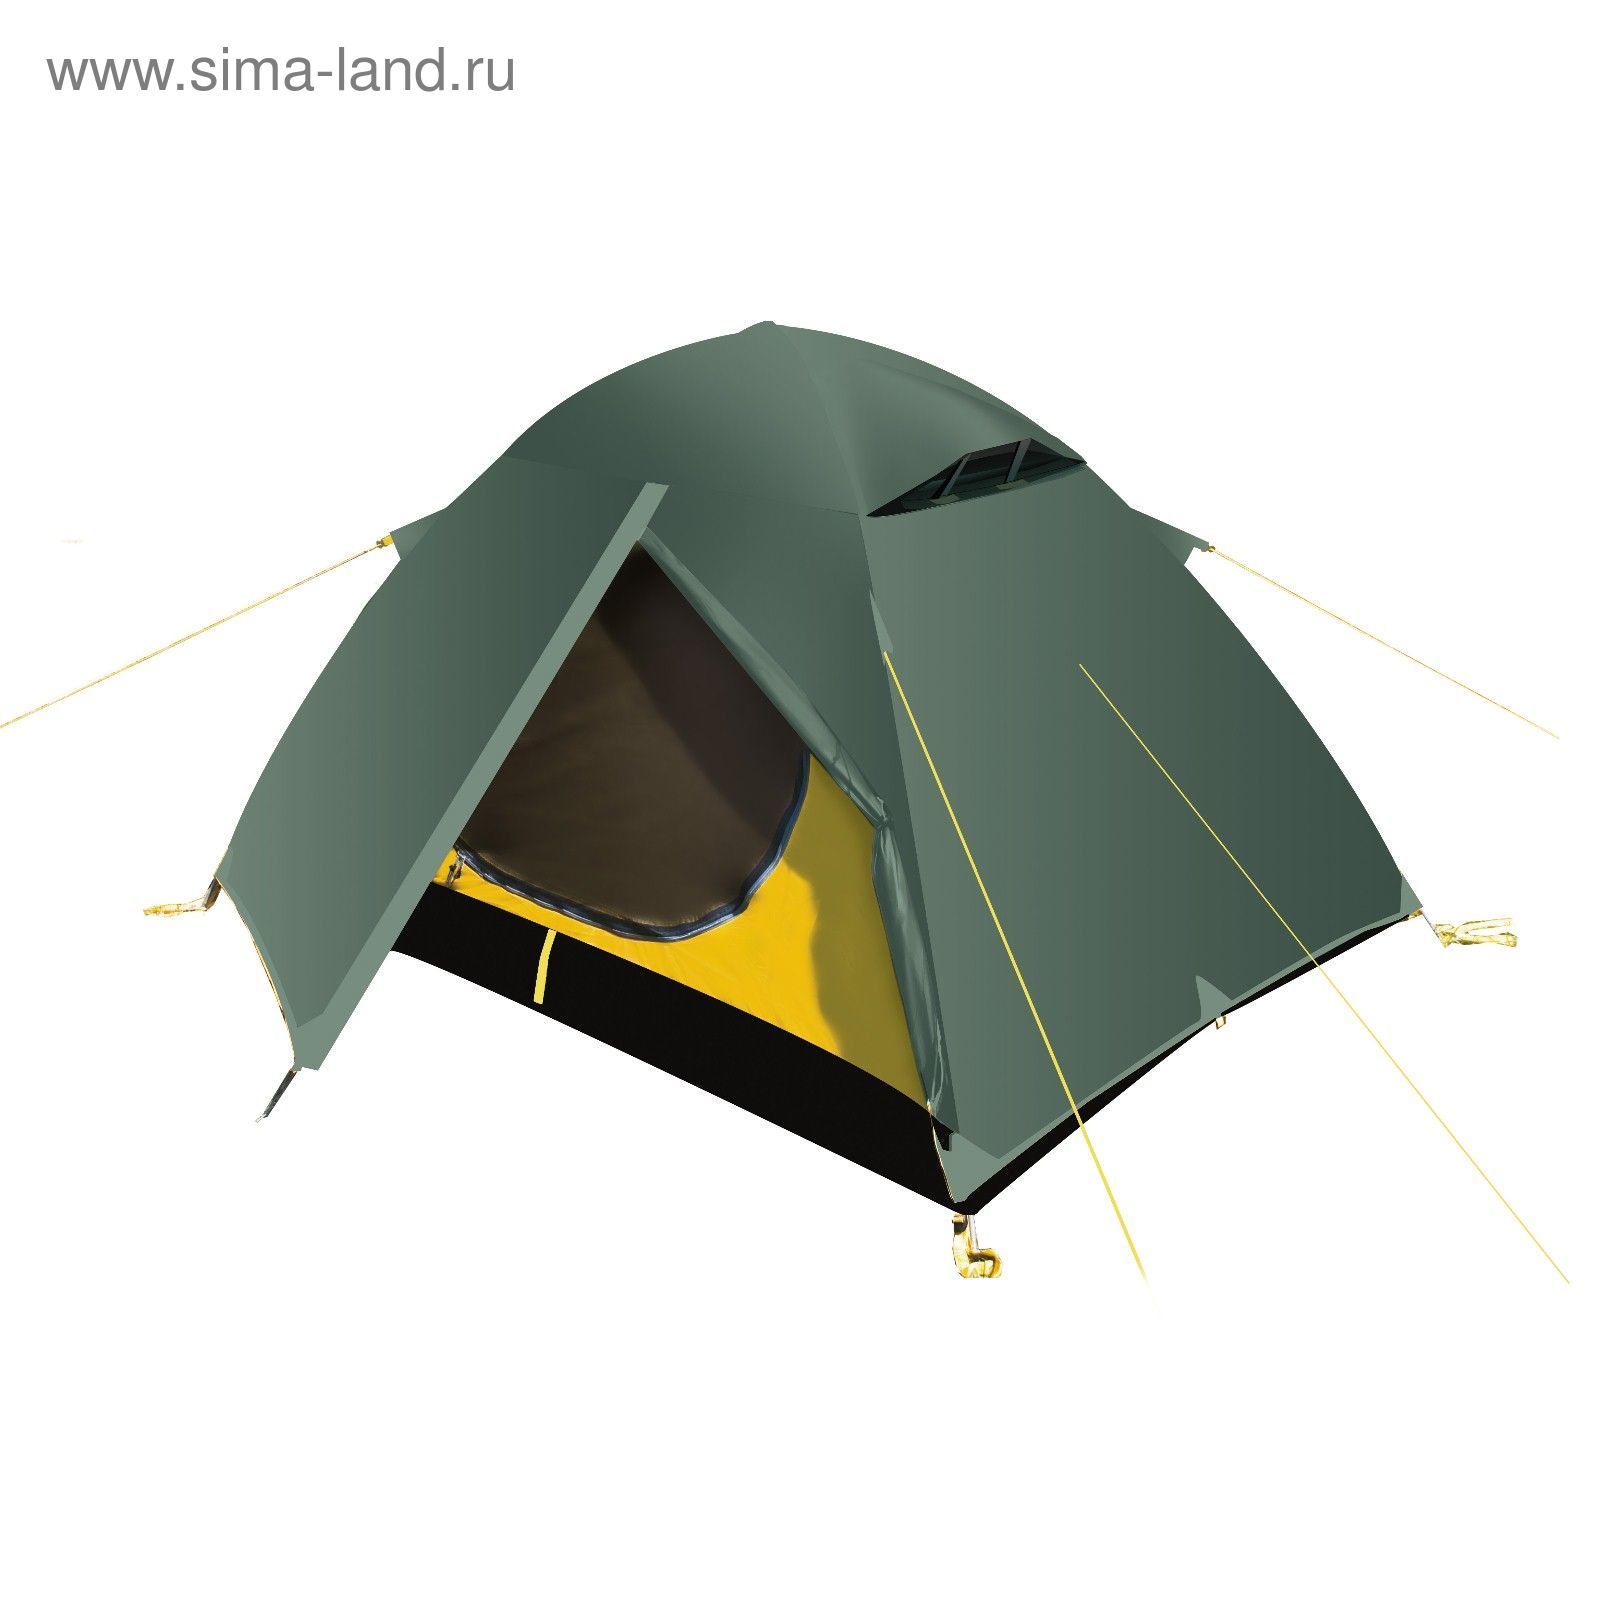 Палатка, серия "Trekking" Travel 3, зеленая, трехместная